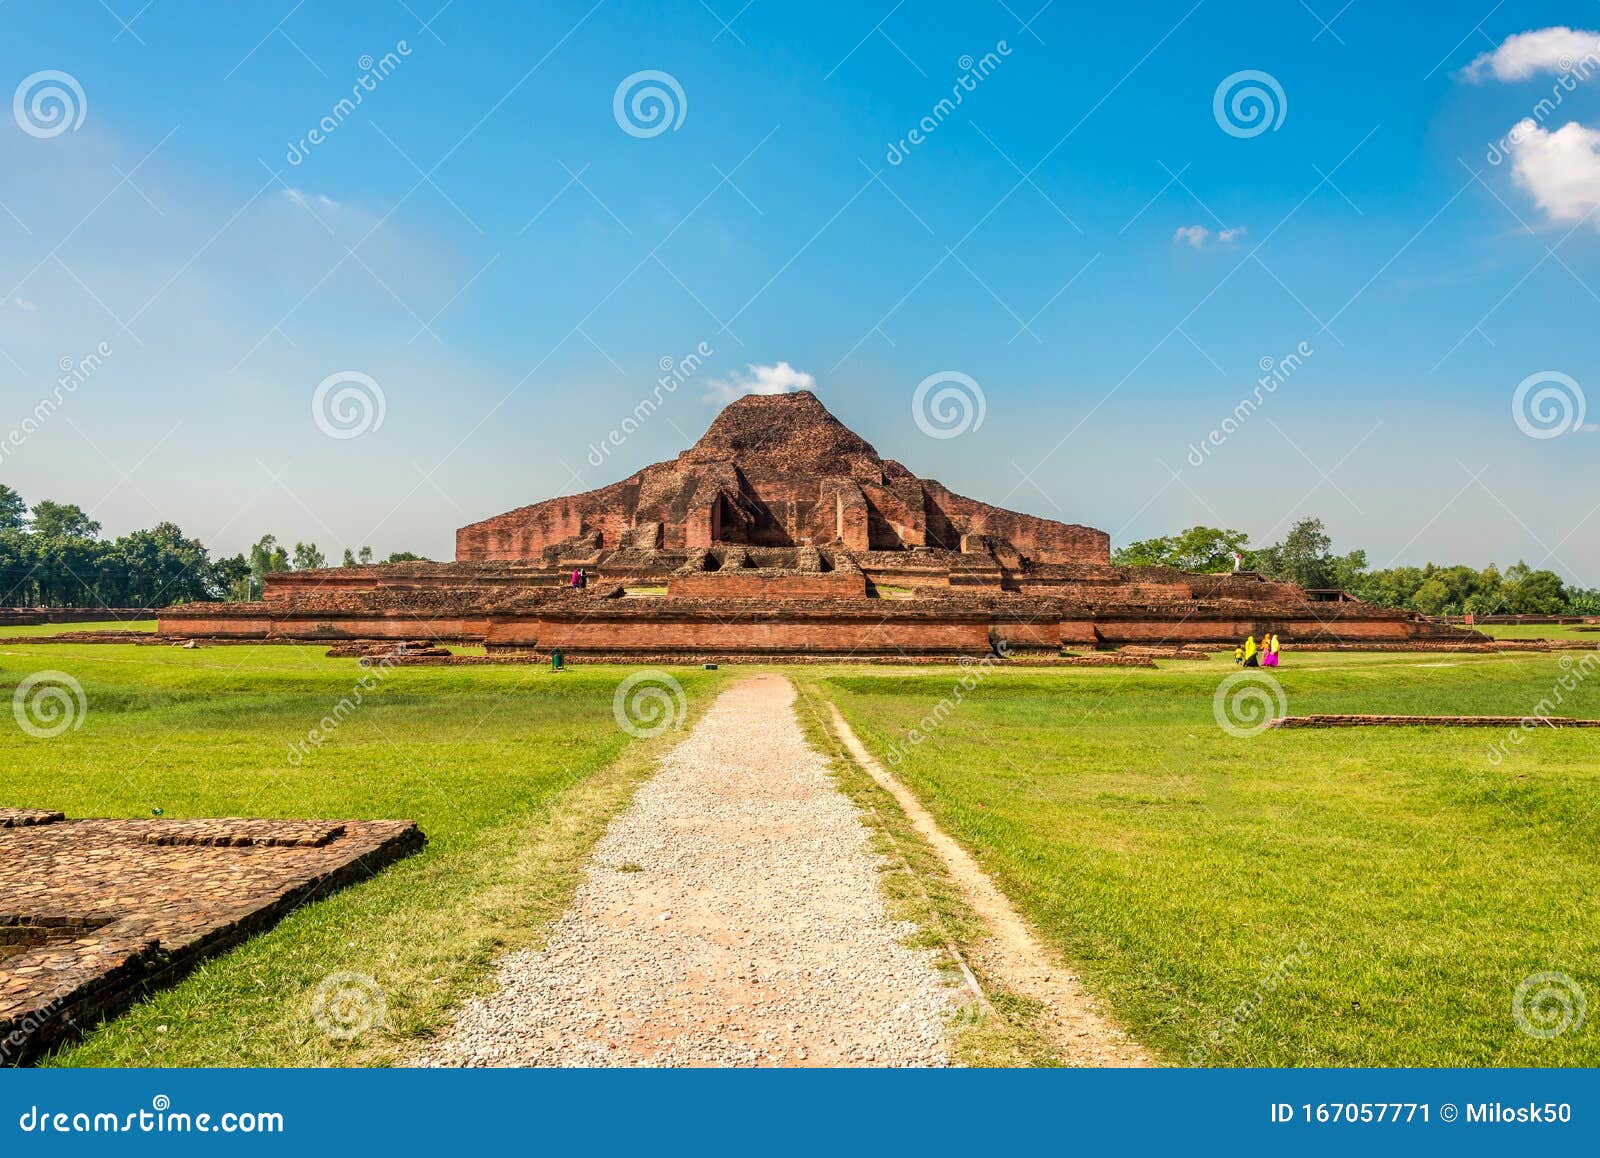 path to the ancient ruins of monastery somapura mahavihara in paharapur - bangladesh